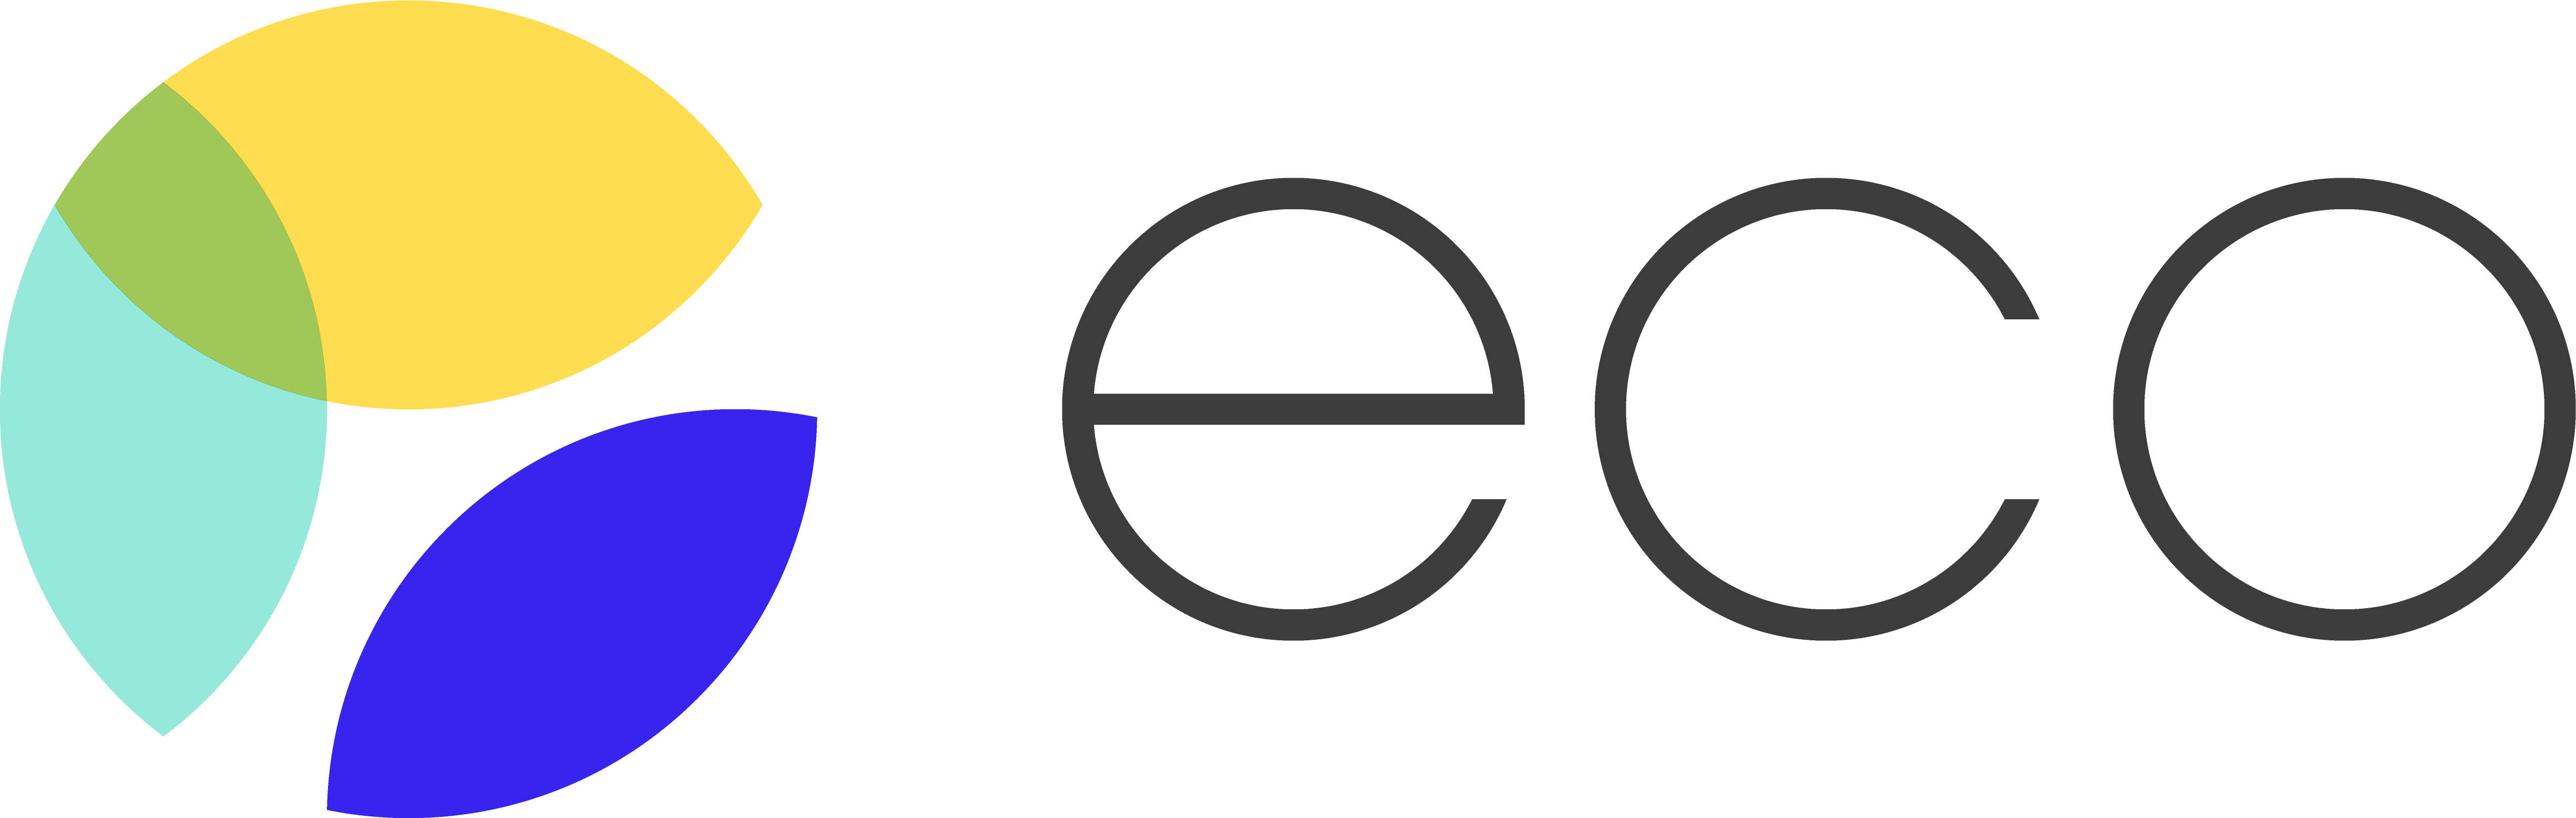 Eco house logo design Royalty Free Vector Image